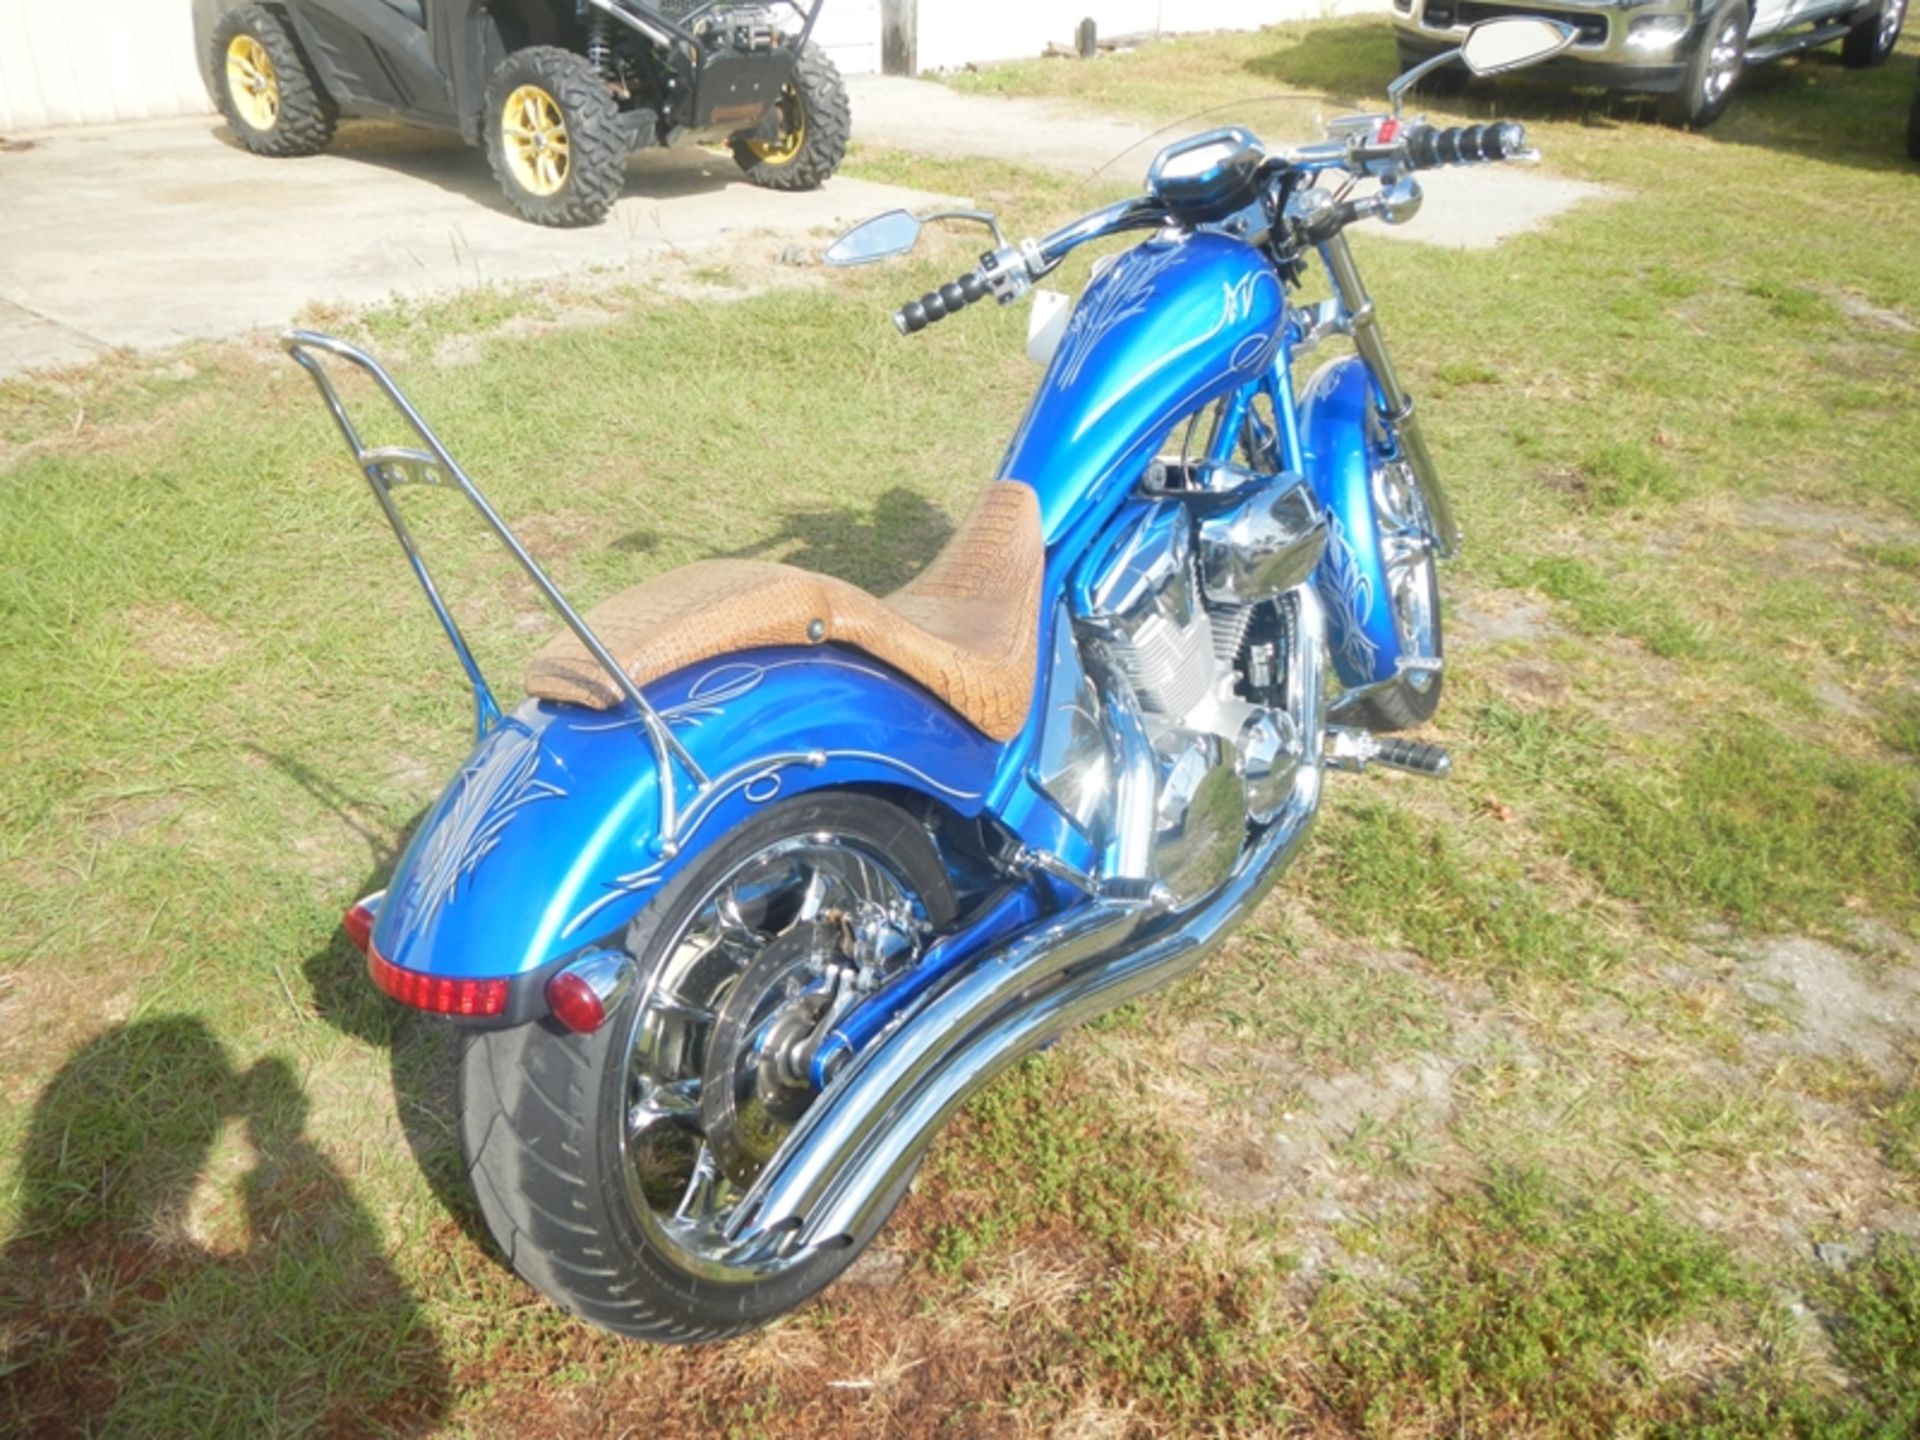 2010 HONDA Fury 1300 VTX custom motorcycle - 27,048 miles - JH2SC6106AK000129 - Image 3 of 4